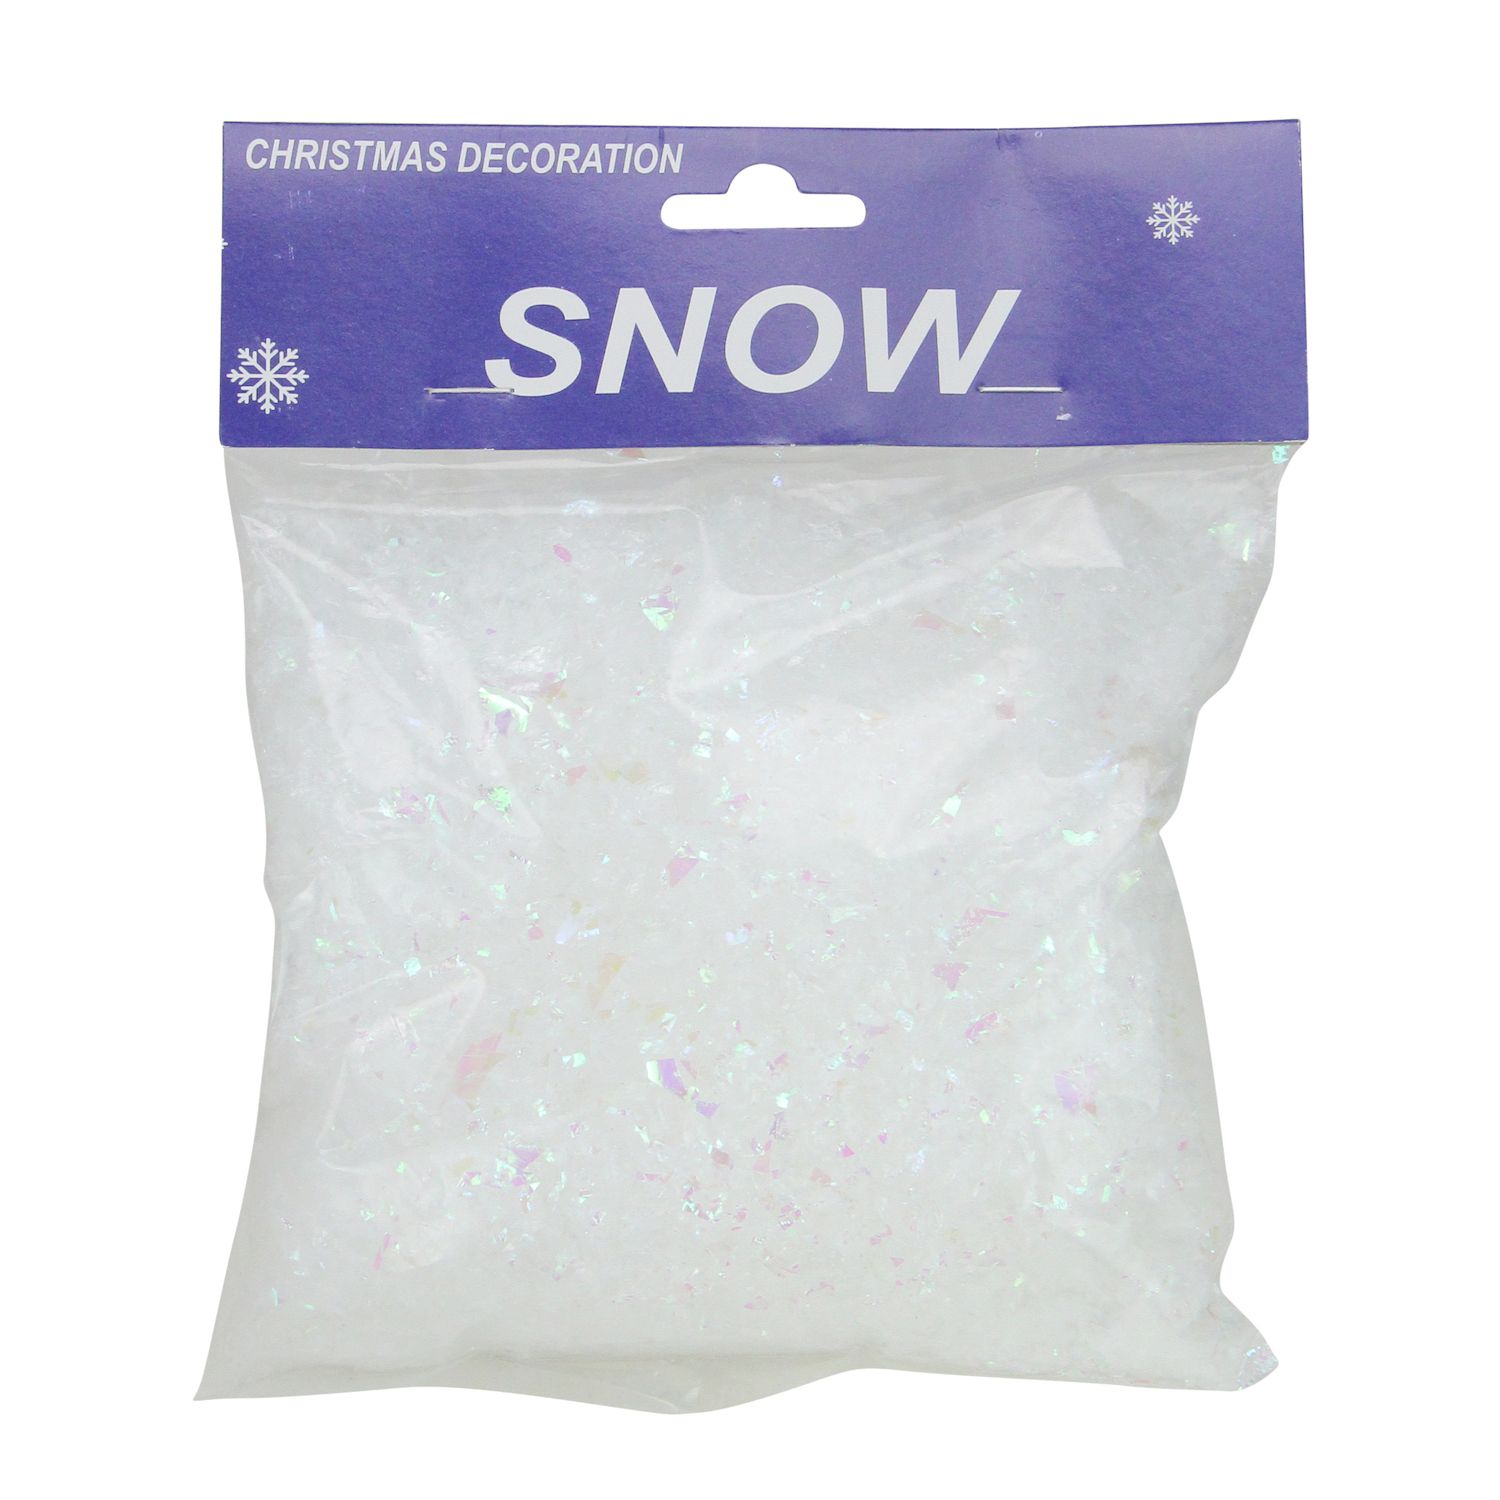 Santa Fake Snow Spray - Snow Blower Aerosol. 16oz cans. Brand new